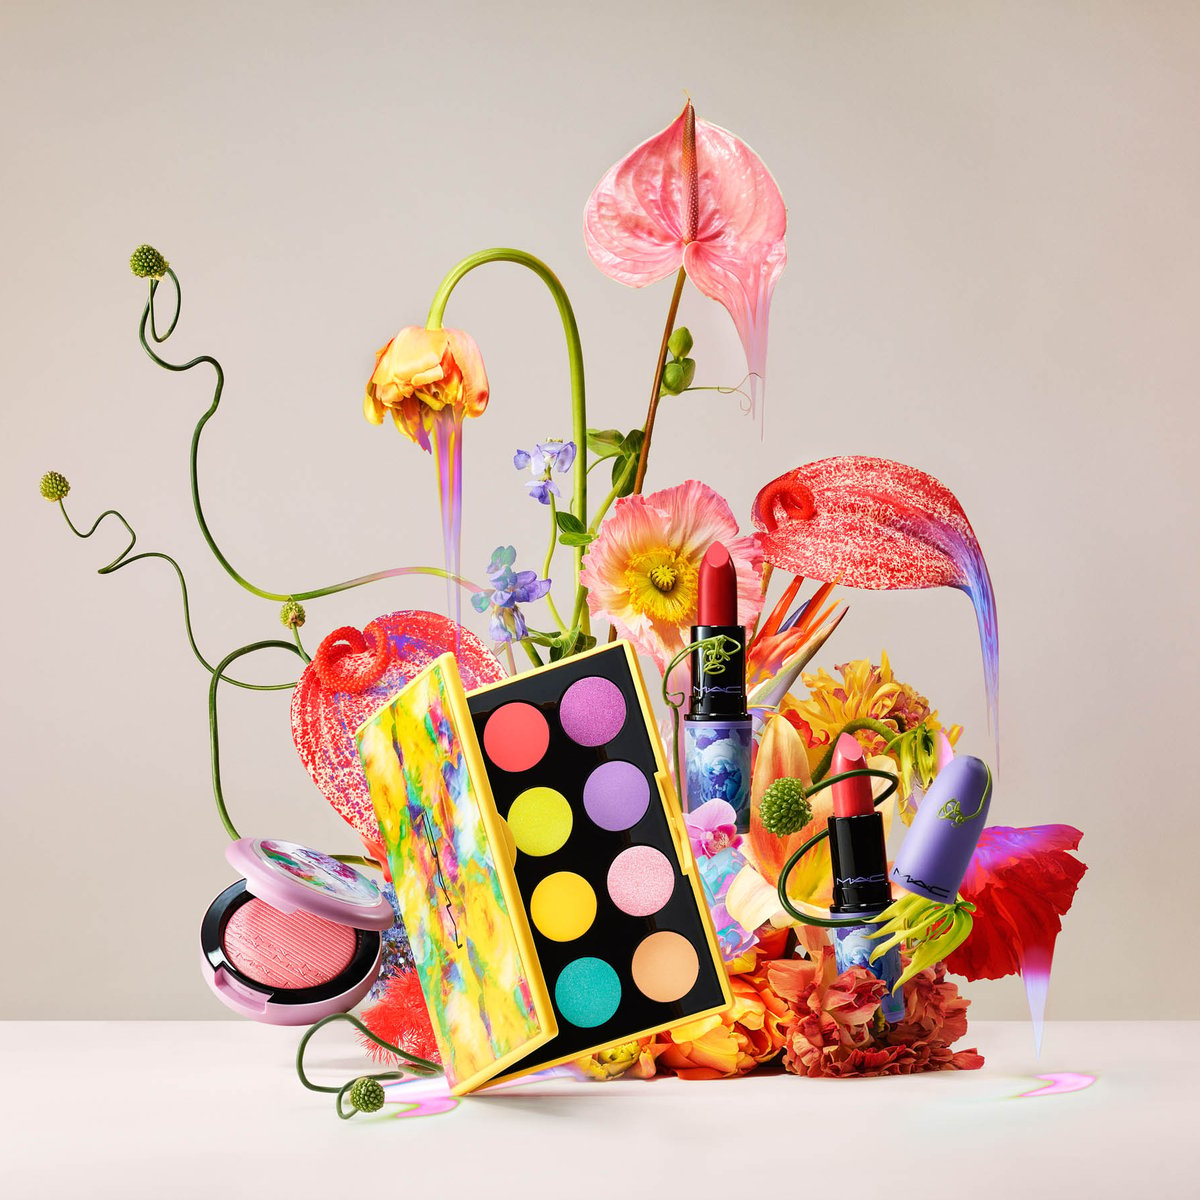 M・A・Cが新作「ボタニック パニック」発売、カラフルな花が咲く夏の ...